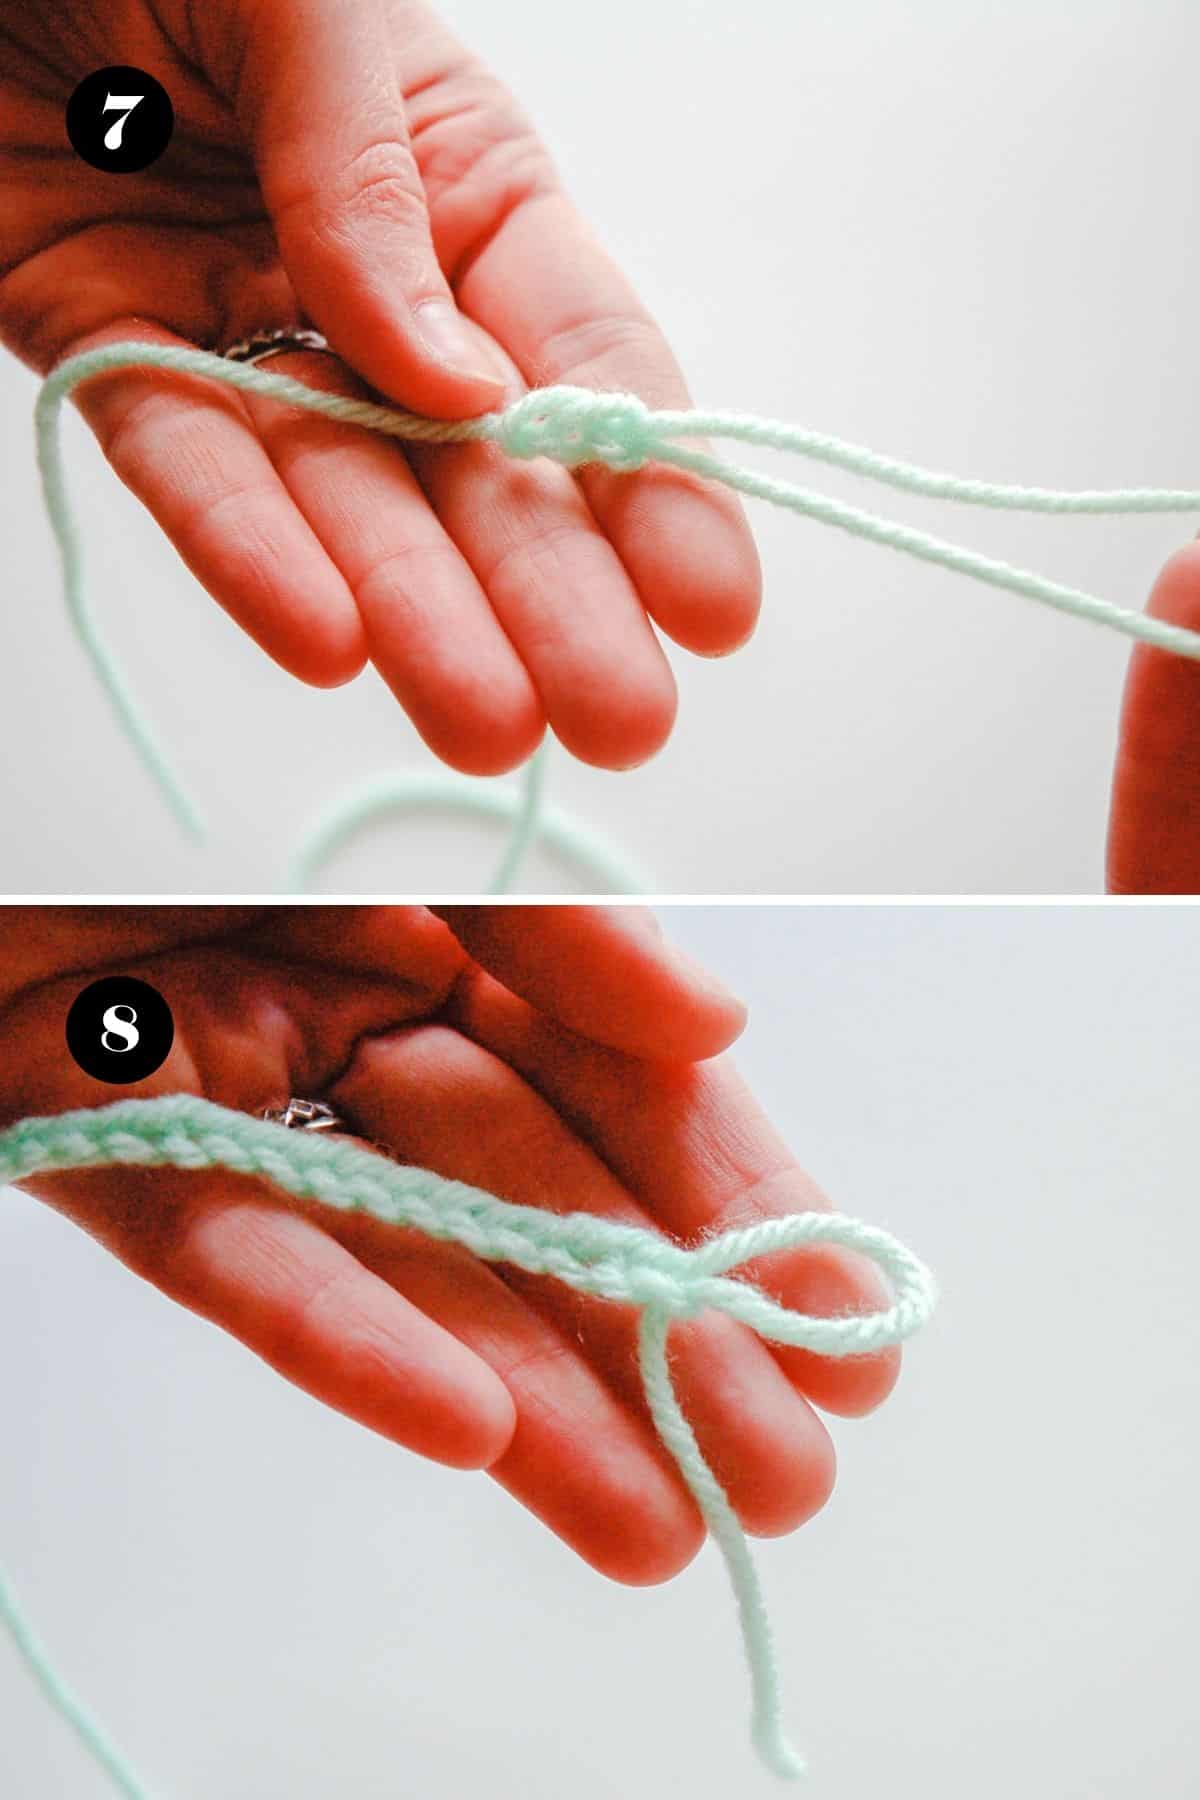 Numbered steps to make a homemade yarn bracelet.